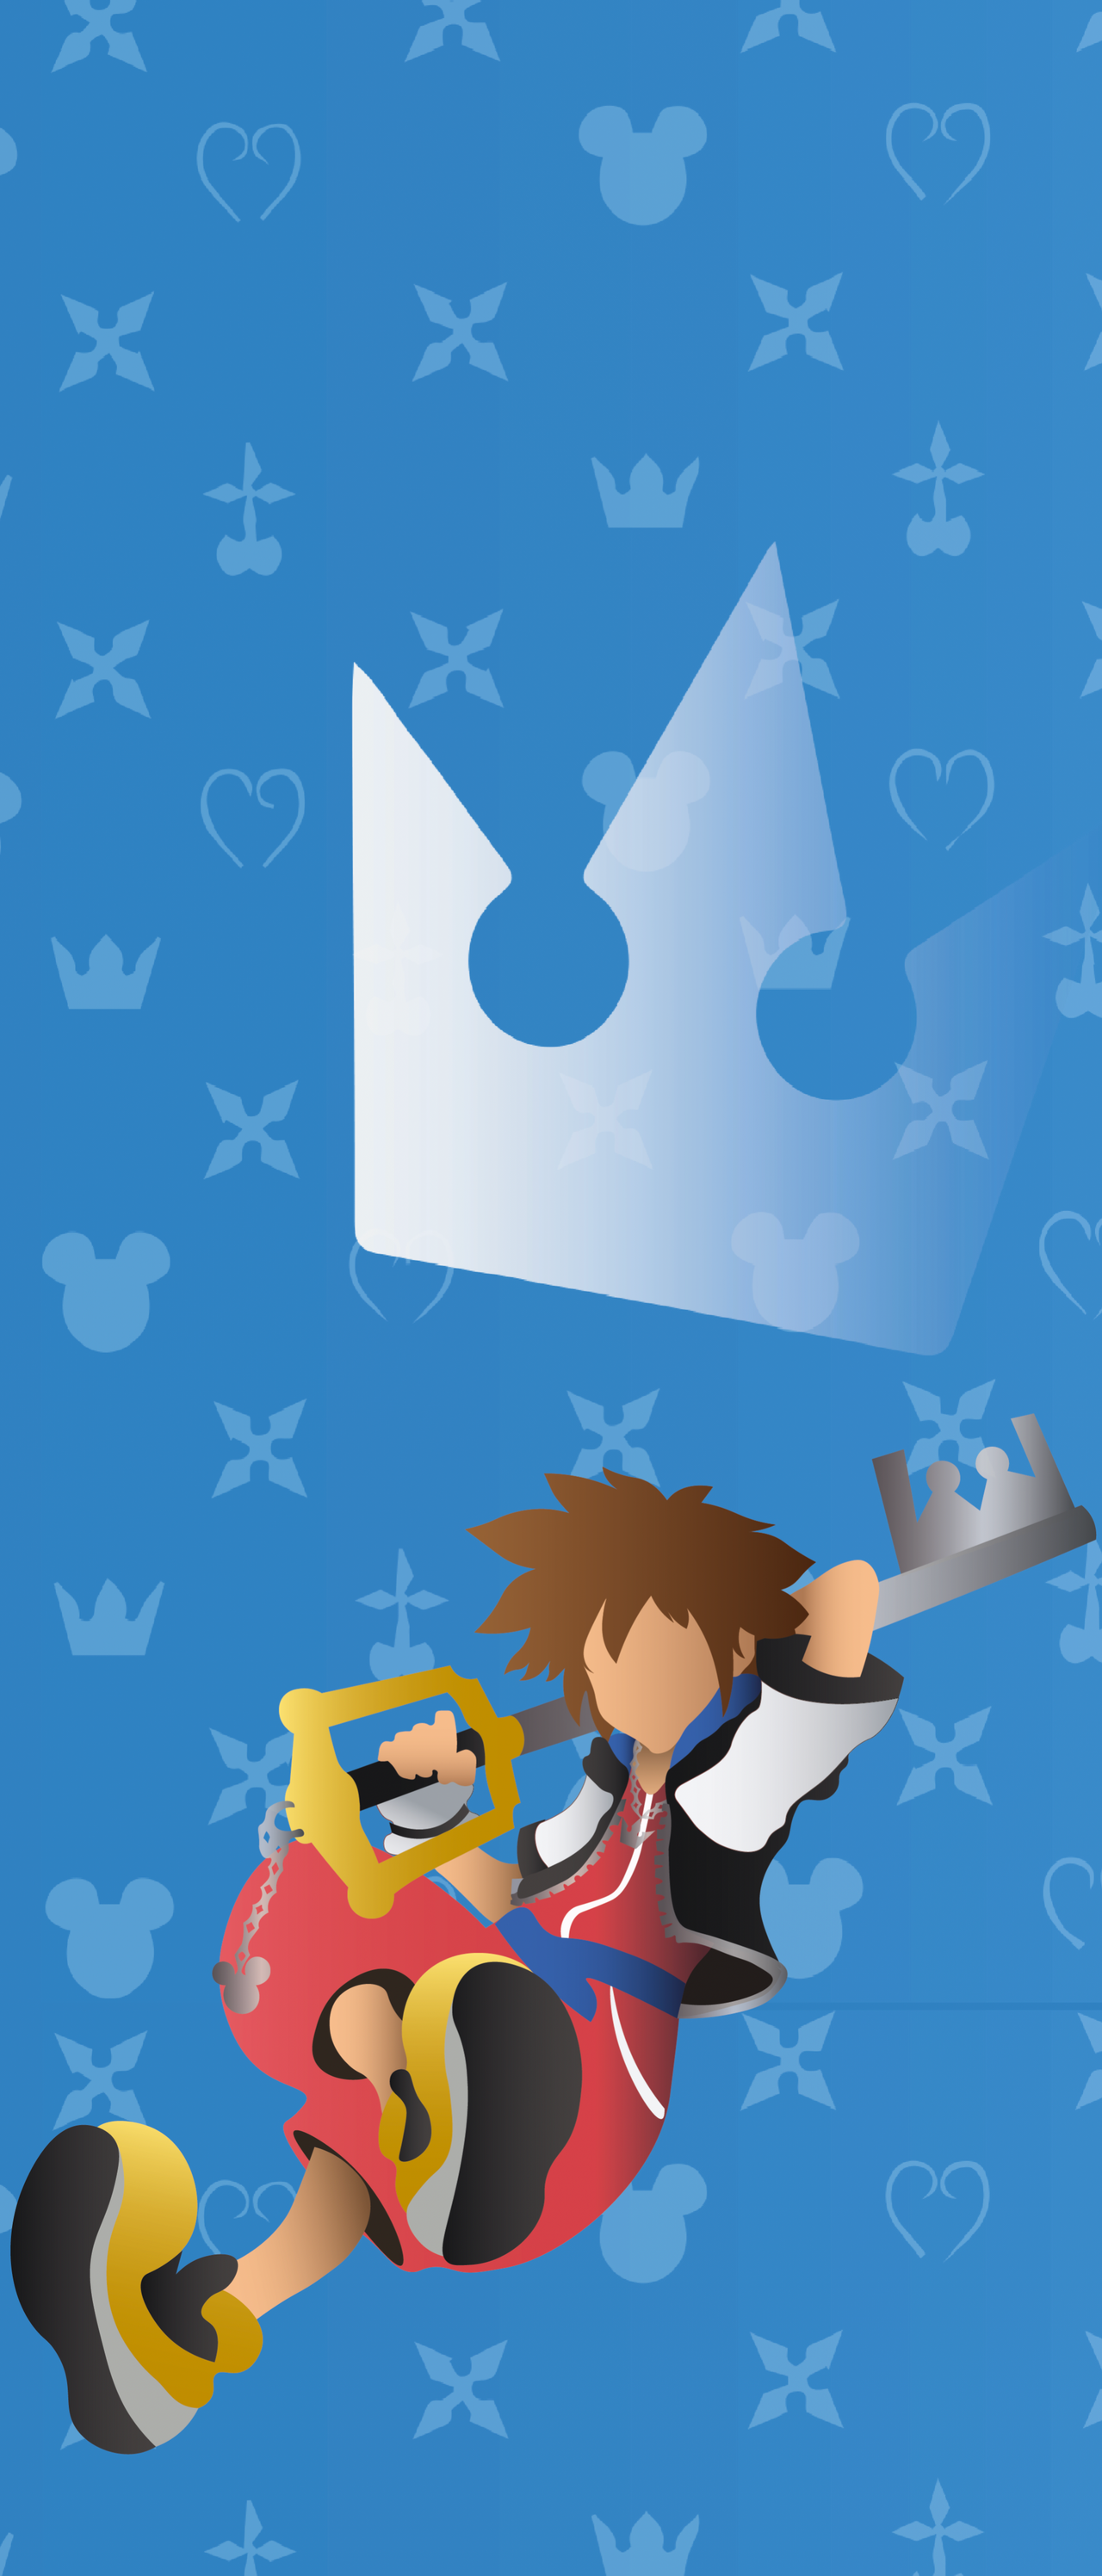 Kingdom Hearts Mobile